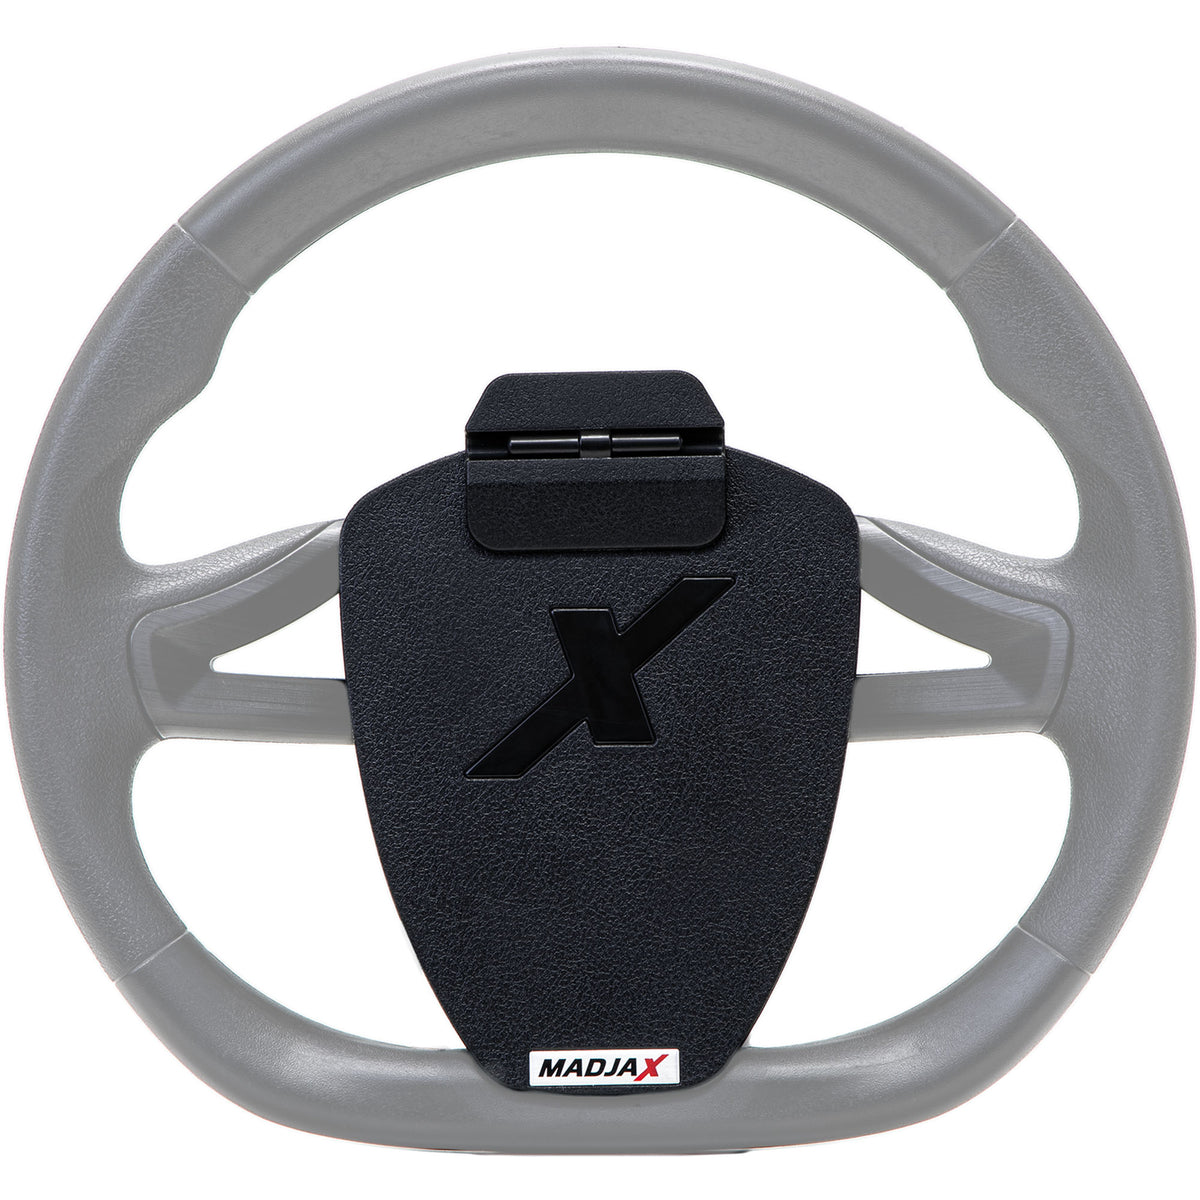 Scorecard Holder for MadJax XSeries Steering Wheels